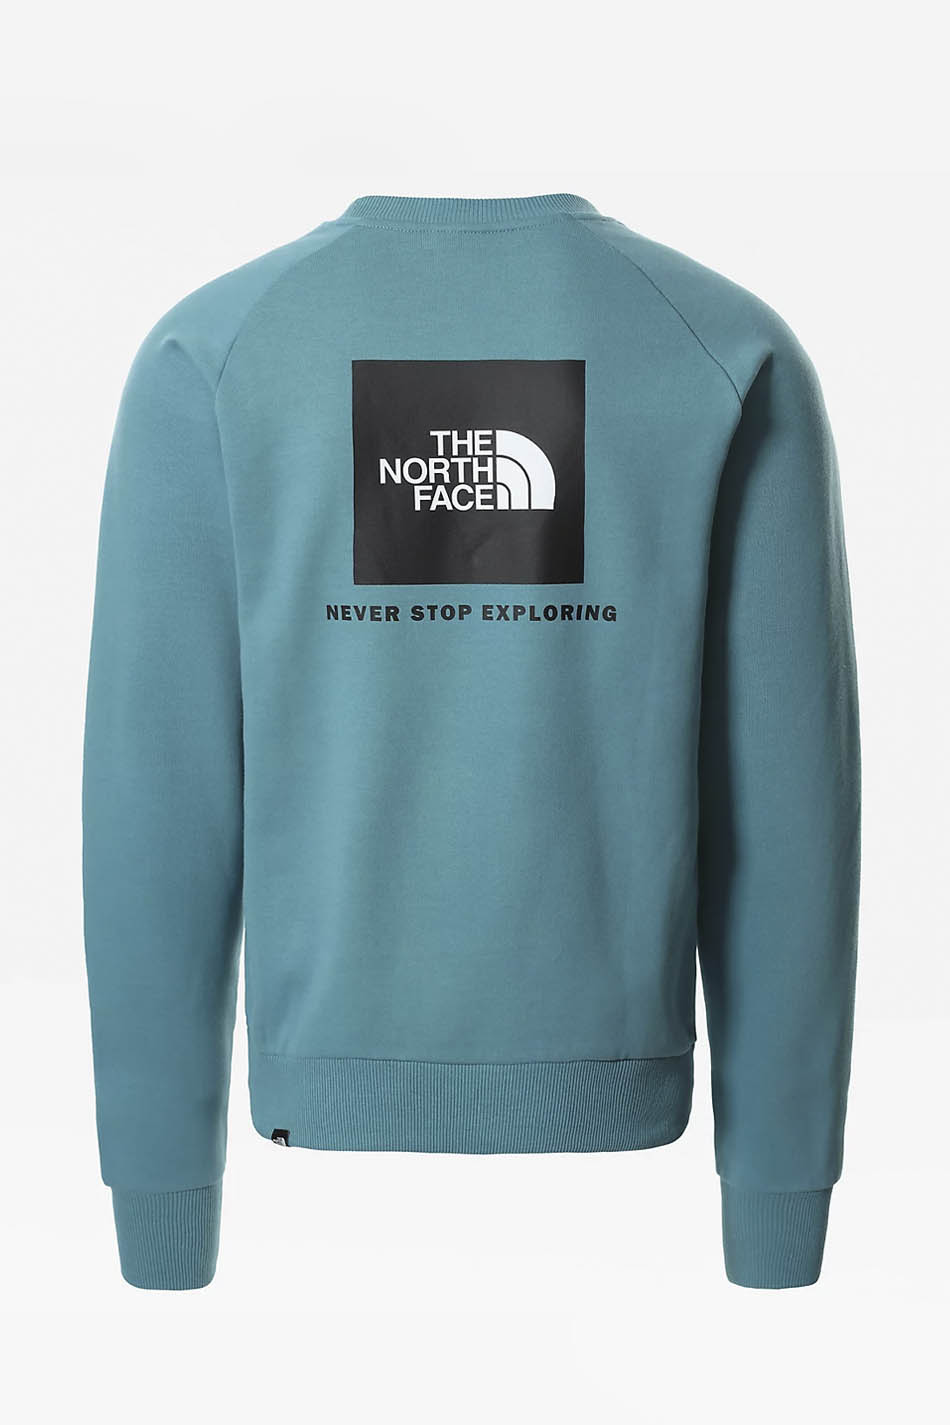 The North Face Redbox Blue Sweatshirt